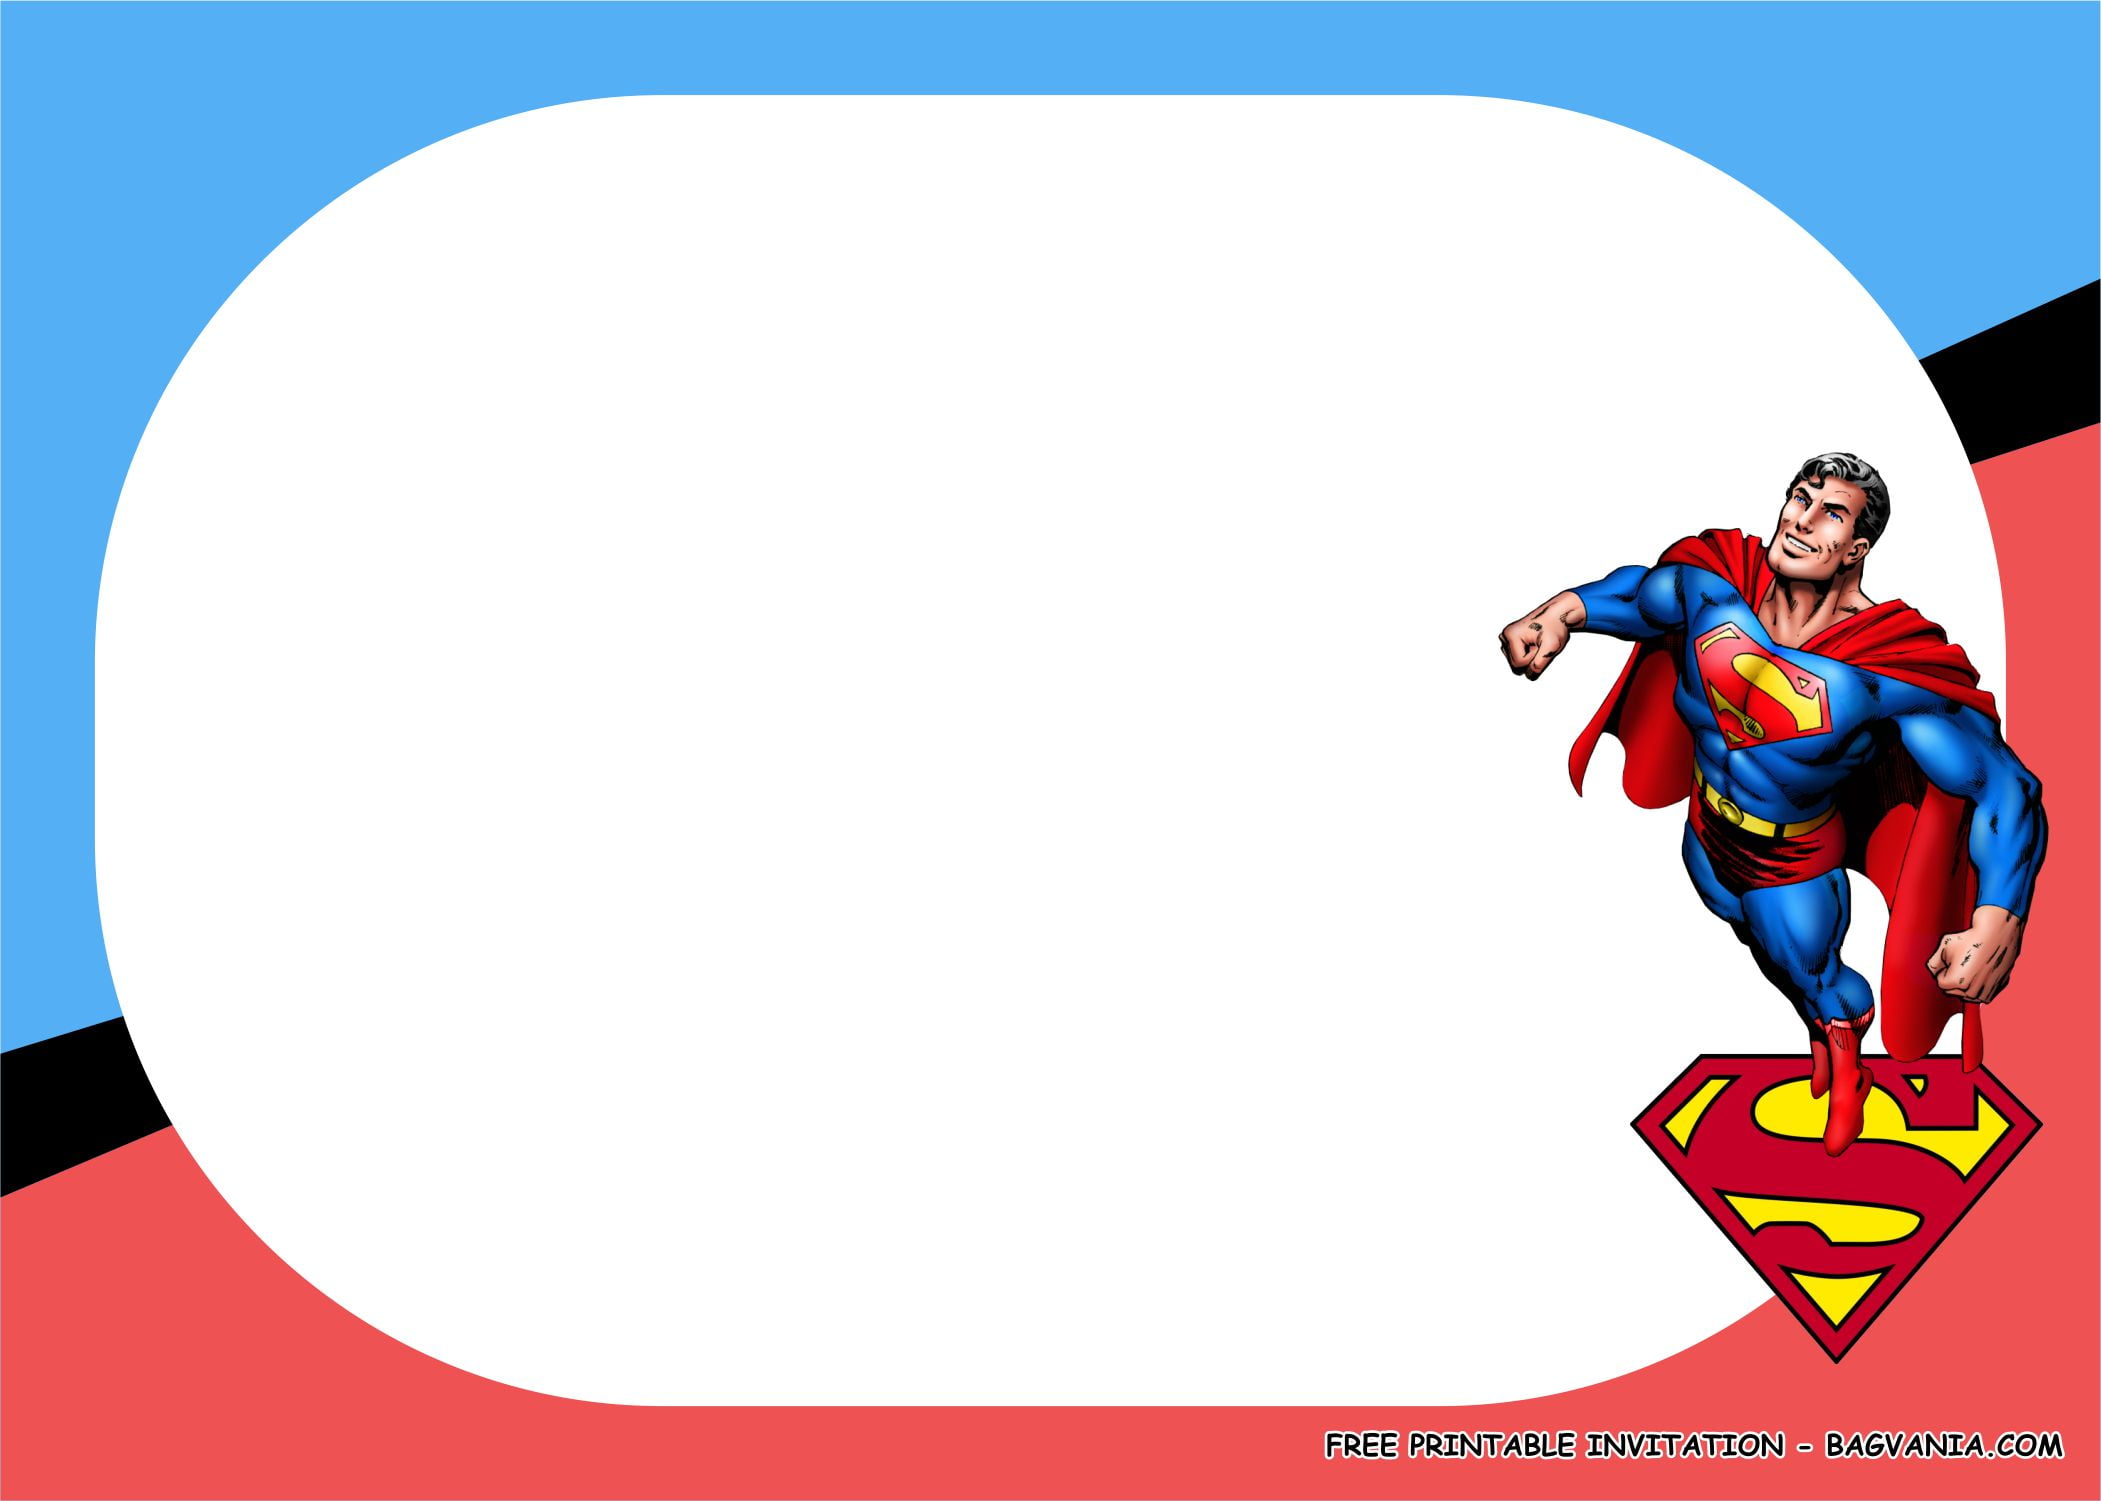 FREE PRINTABLE) – Superman Birthday Party Kits Template  FREE Inside Superman Birthday Card Template